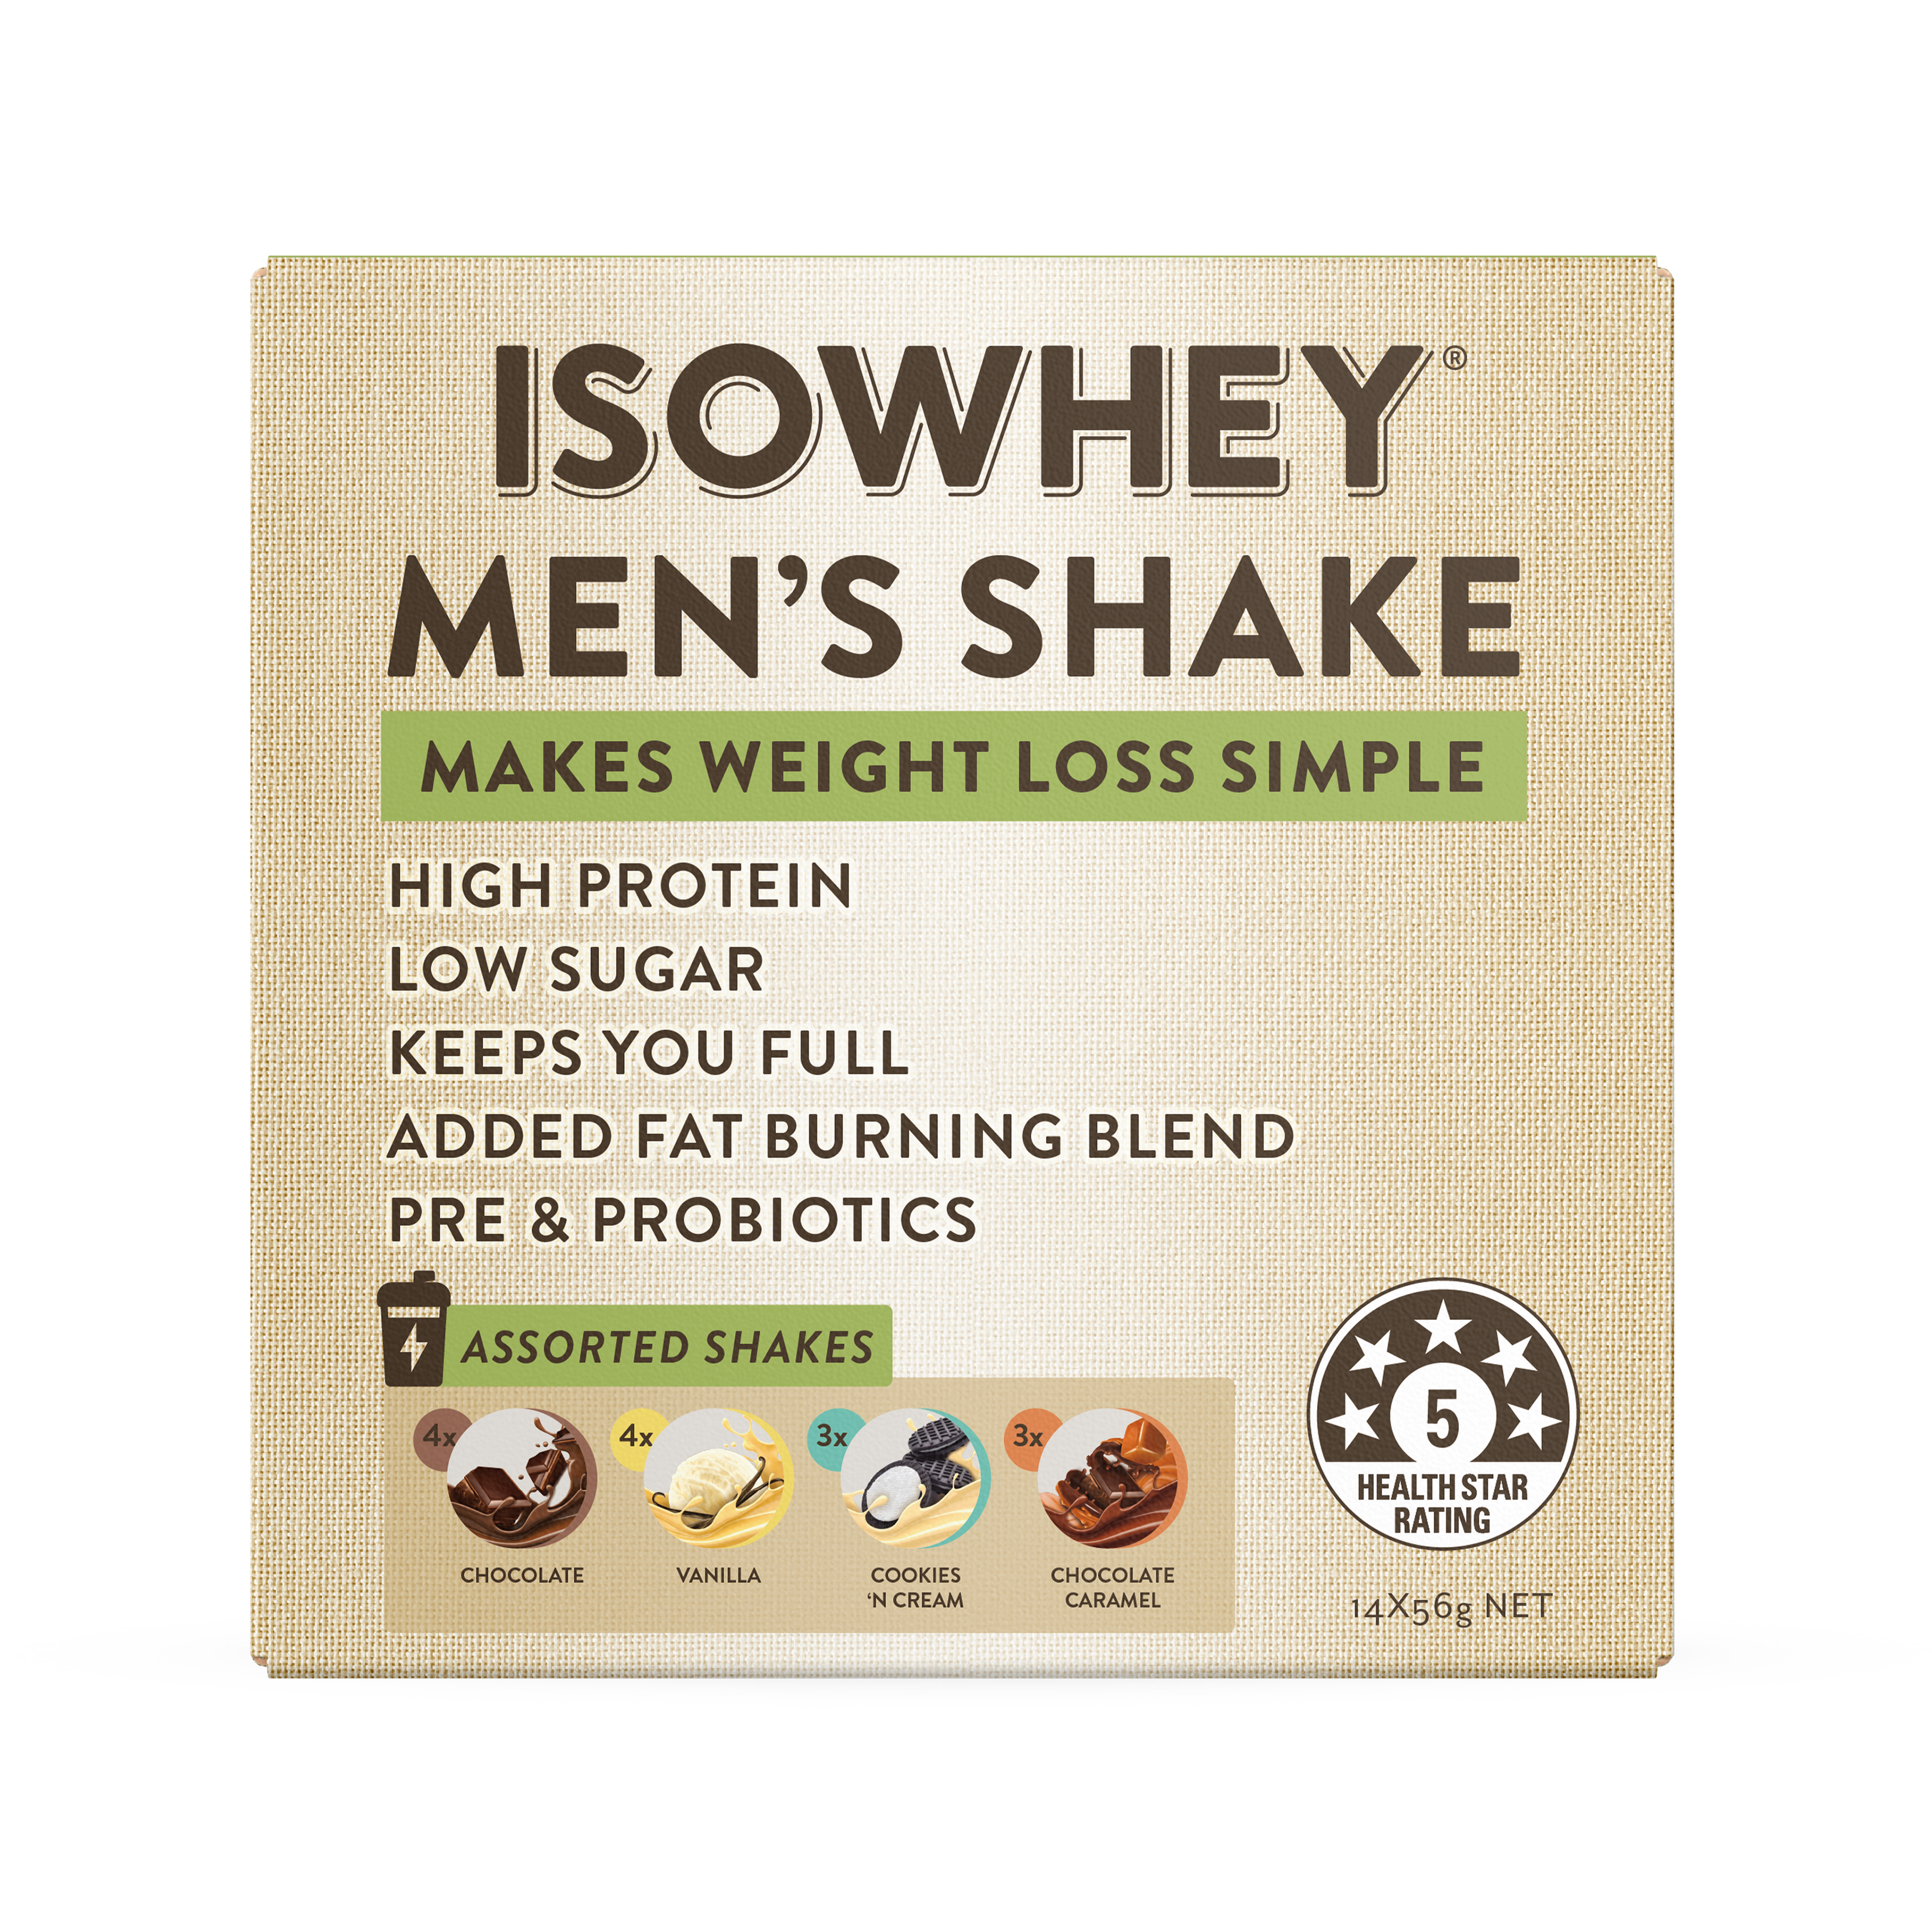 IsoWhey Men's Shake Assorted Pack 14 x 56g